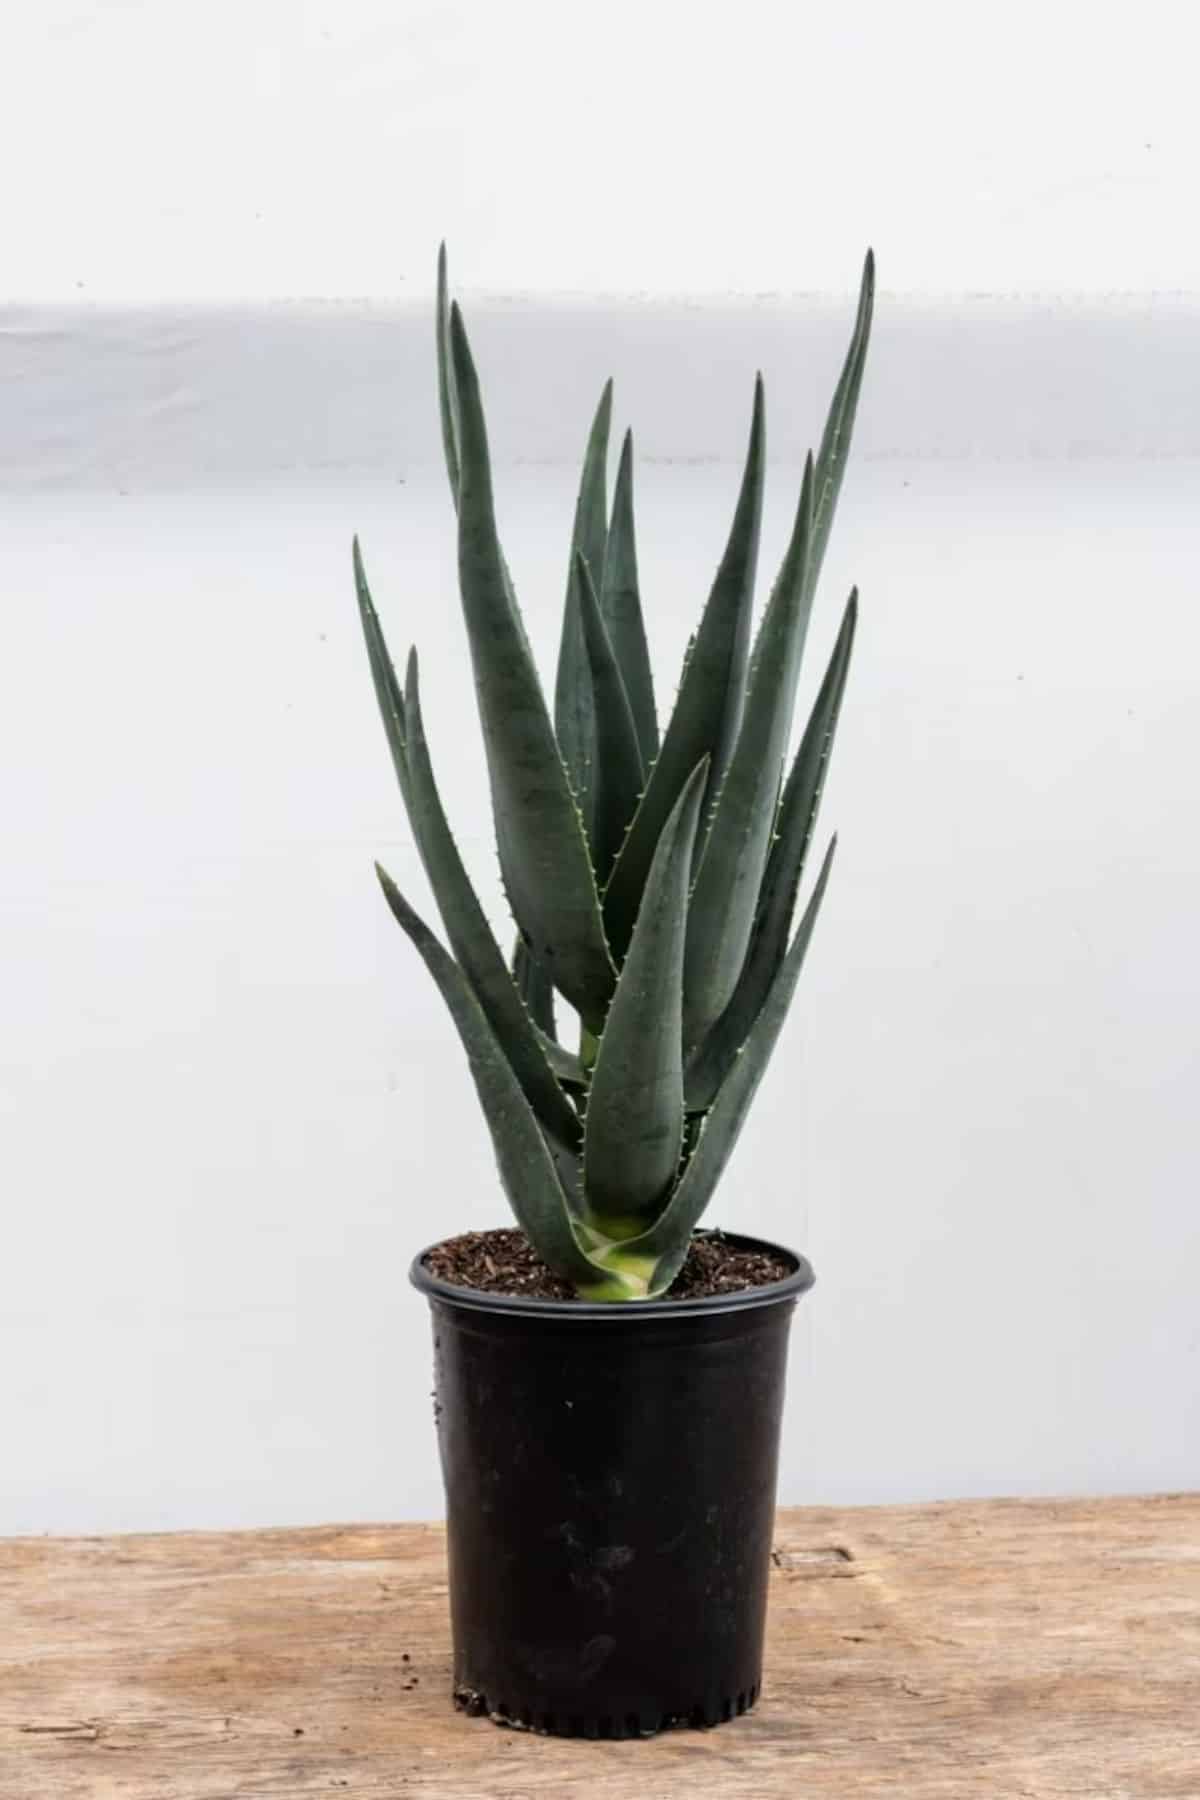 Aloe ‘Hercules’ grows in a small plastic pot.